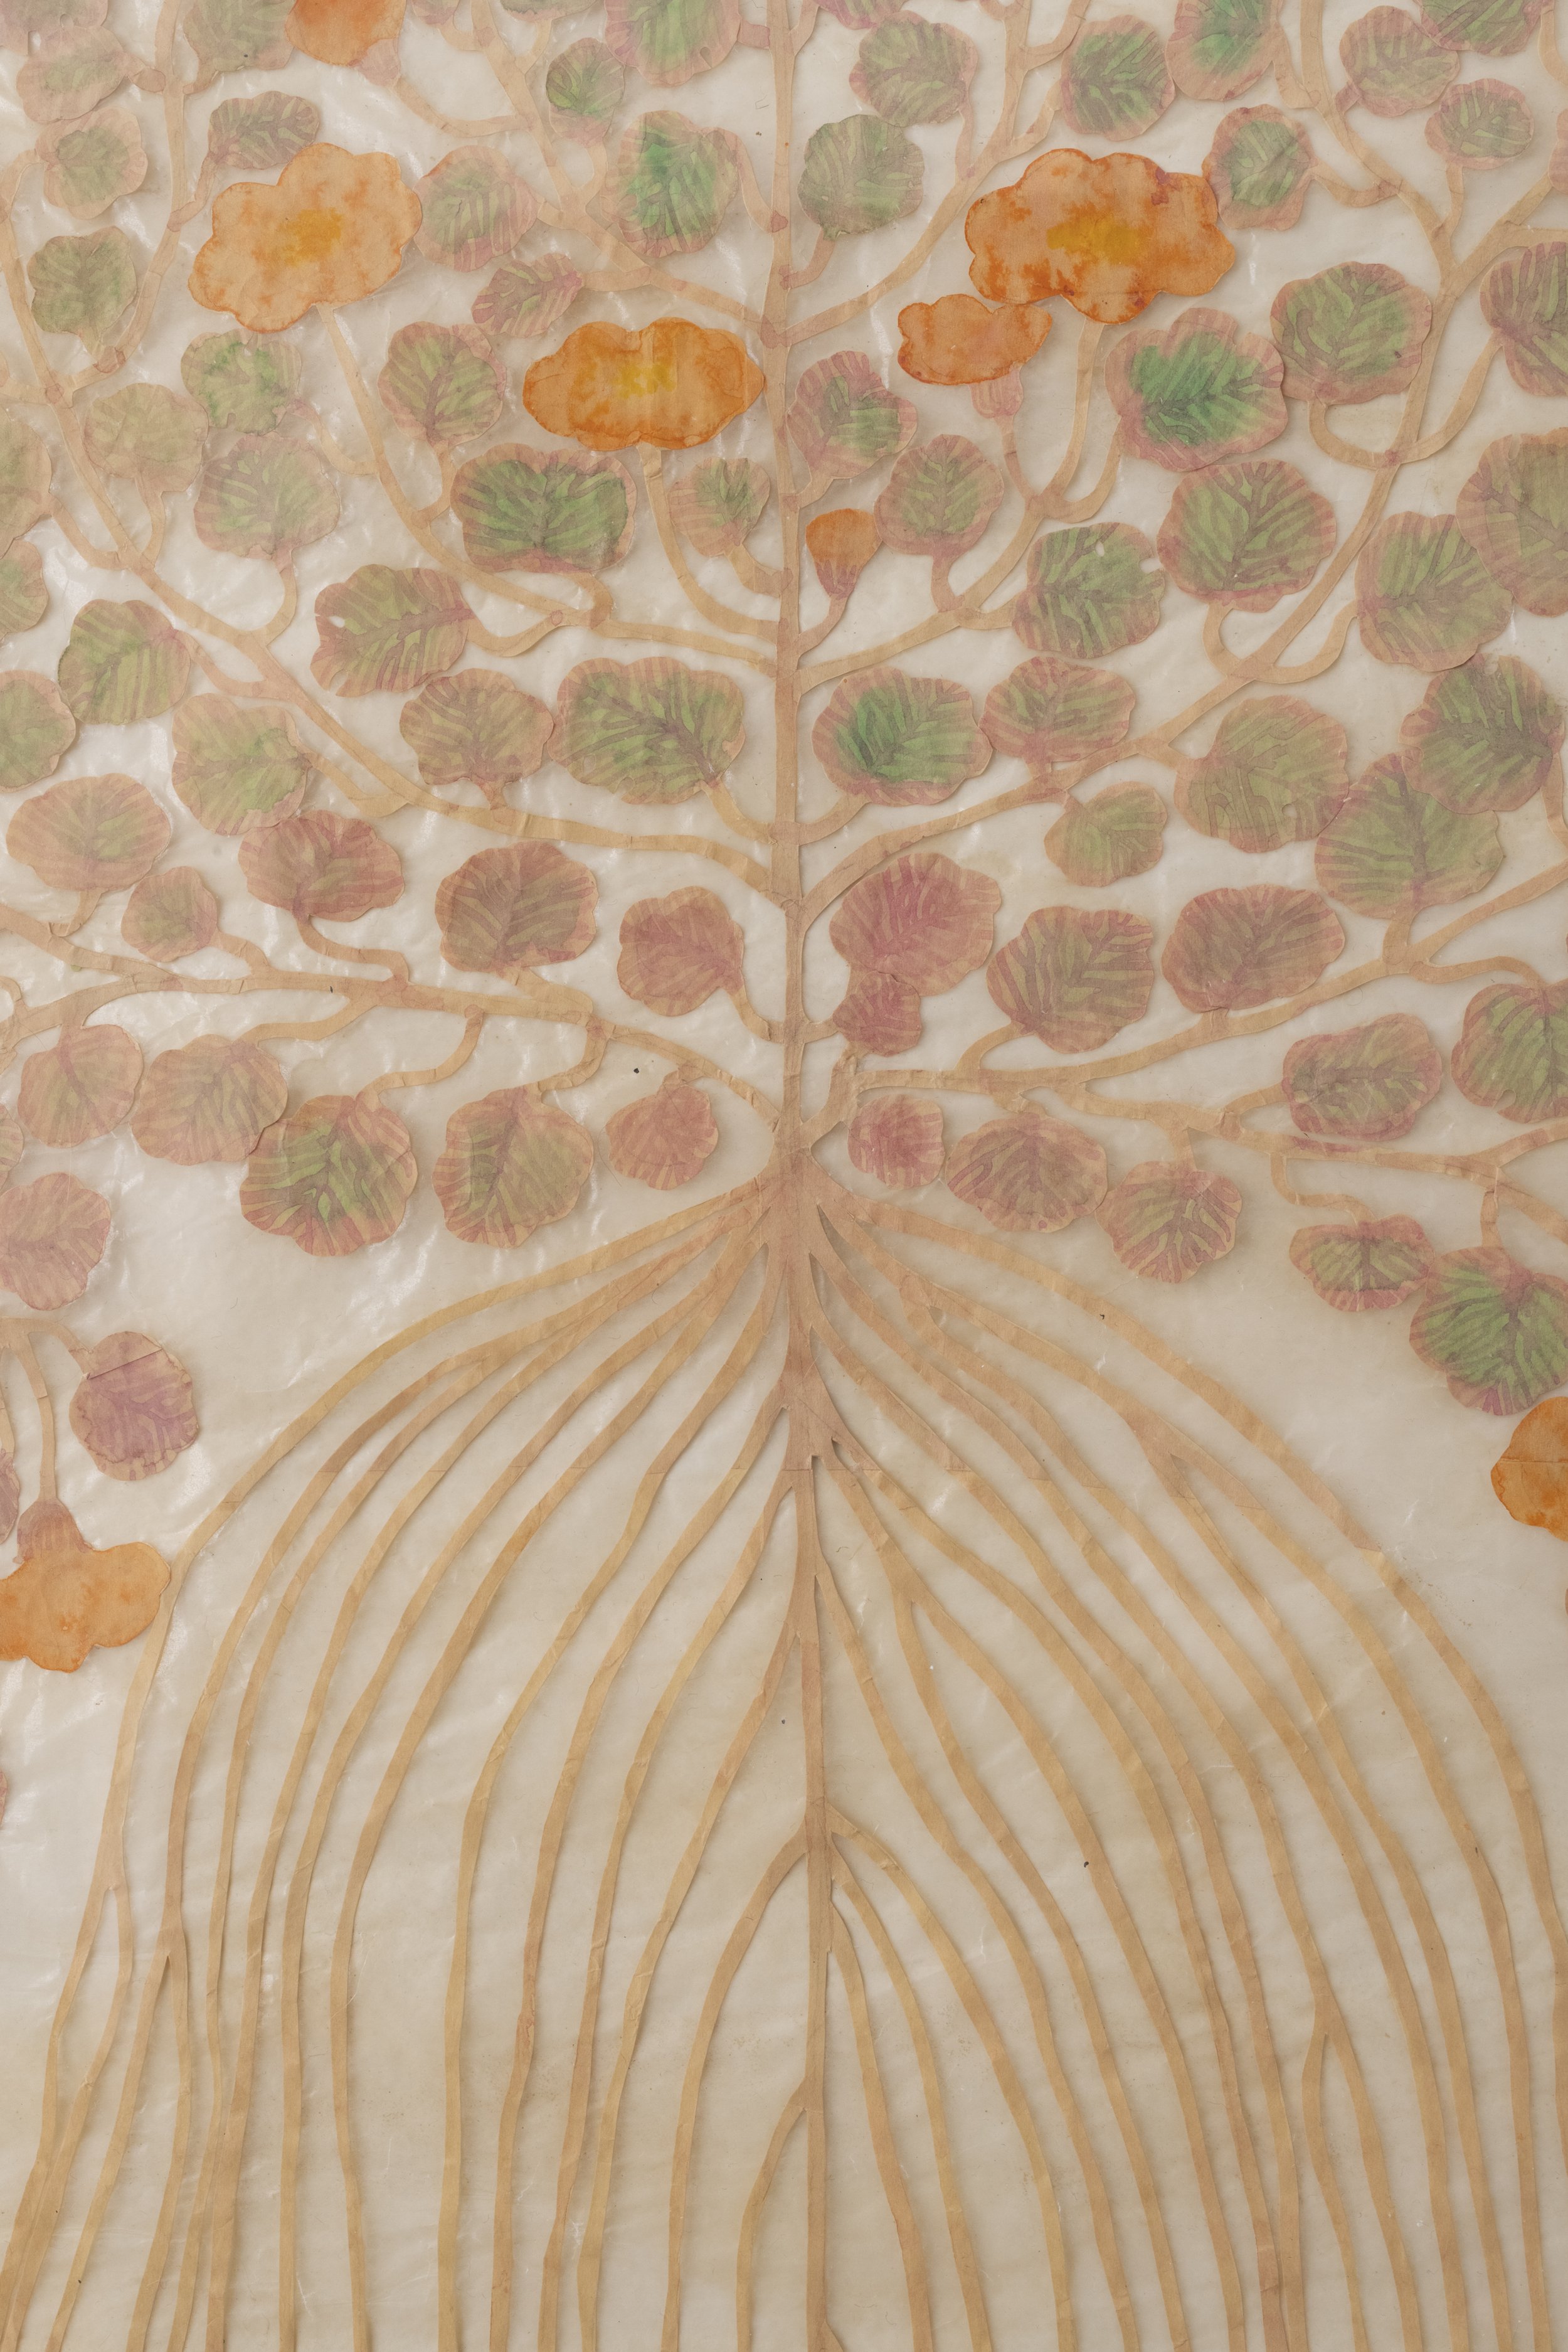 Fumi Imamura, One flower (orange), 2022, collage, watercolor on paper, 72.5 x 43.5 cm (28 1_2 x 17 1_8 in) (unframed), 80 x 60 cm (31 1_2 x 23 5_8 in) (framed), REF 2442, detail.jpg